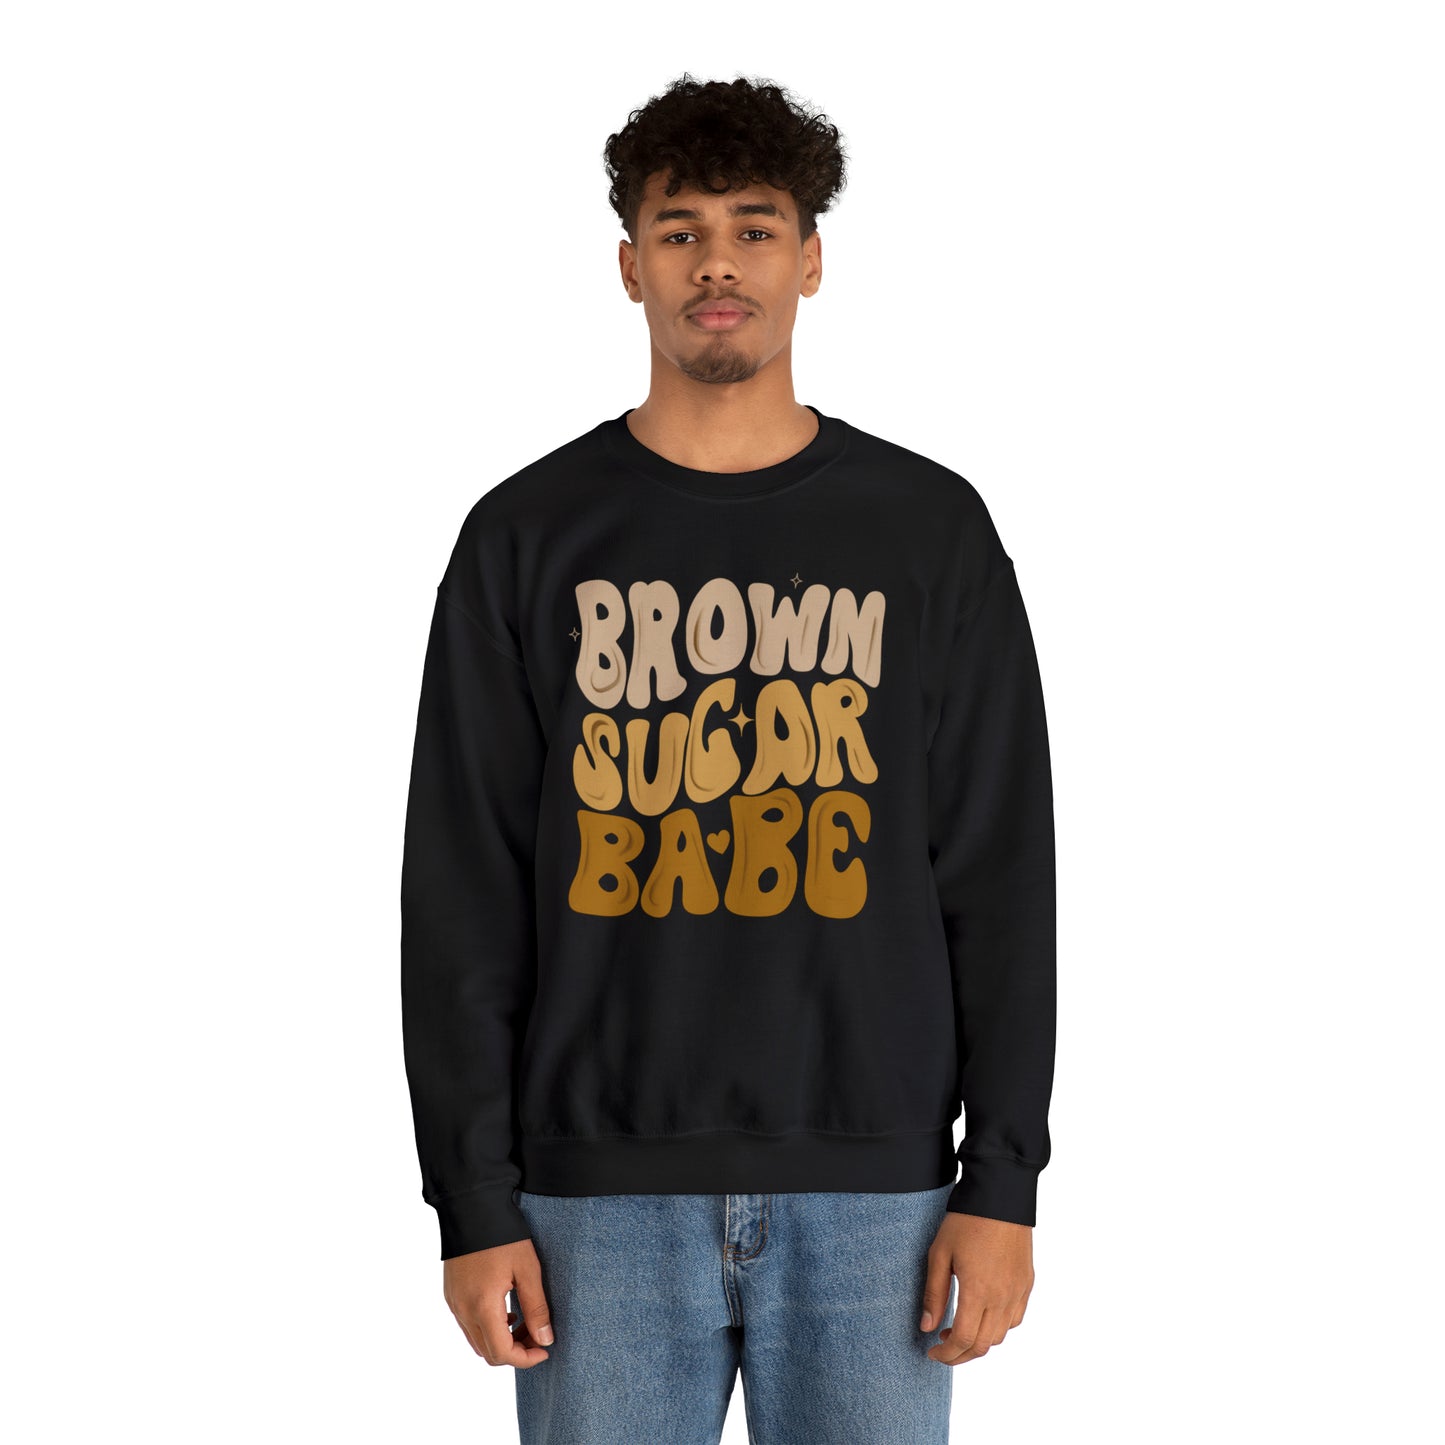 Brown Sugar Babe Sweatshirt